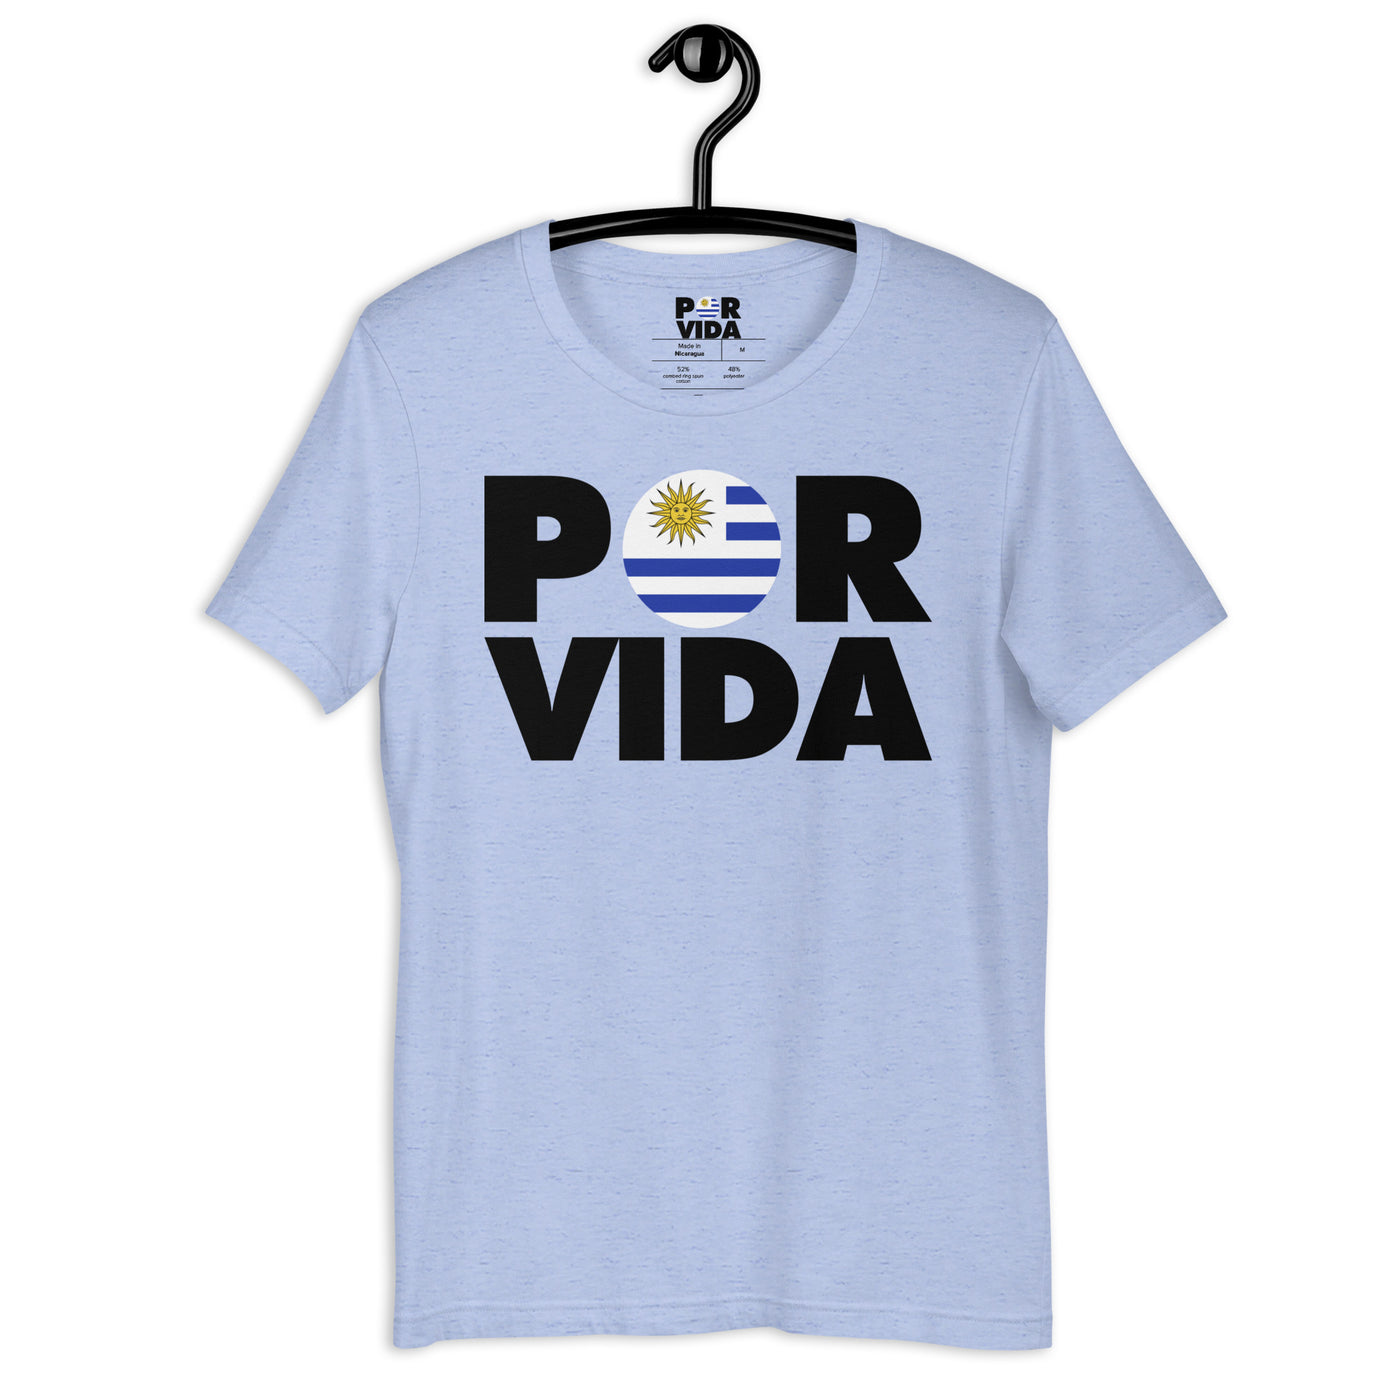 Uruguay POR VIDA (Black Text) Unisex t-shirt